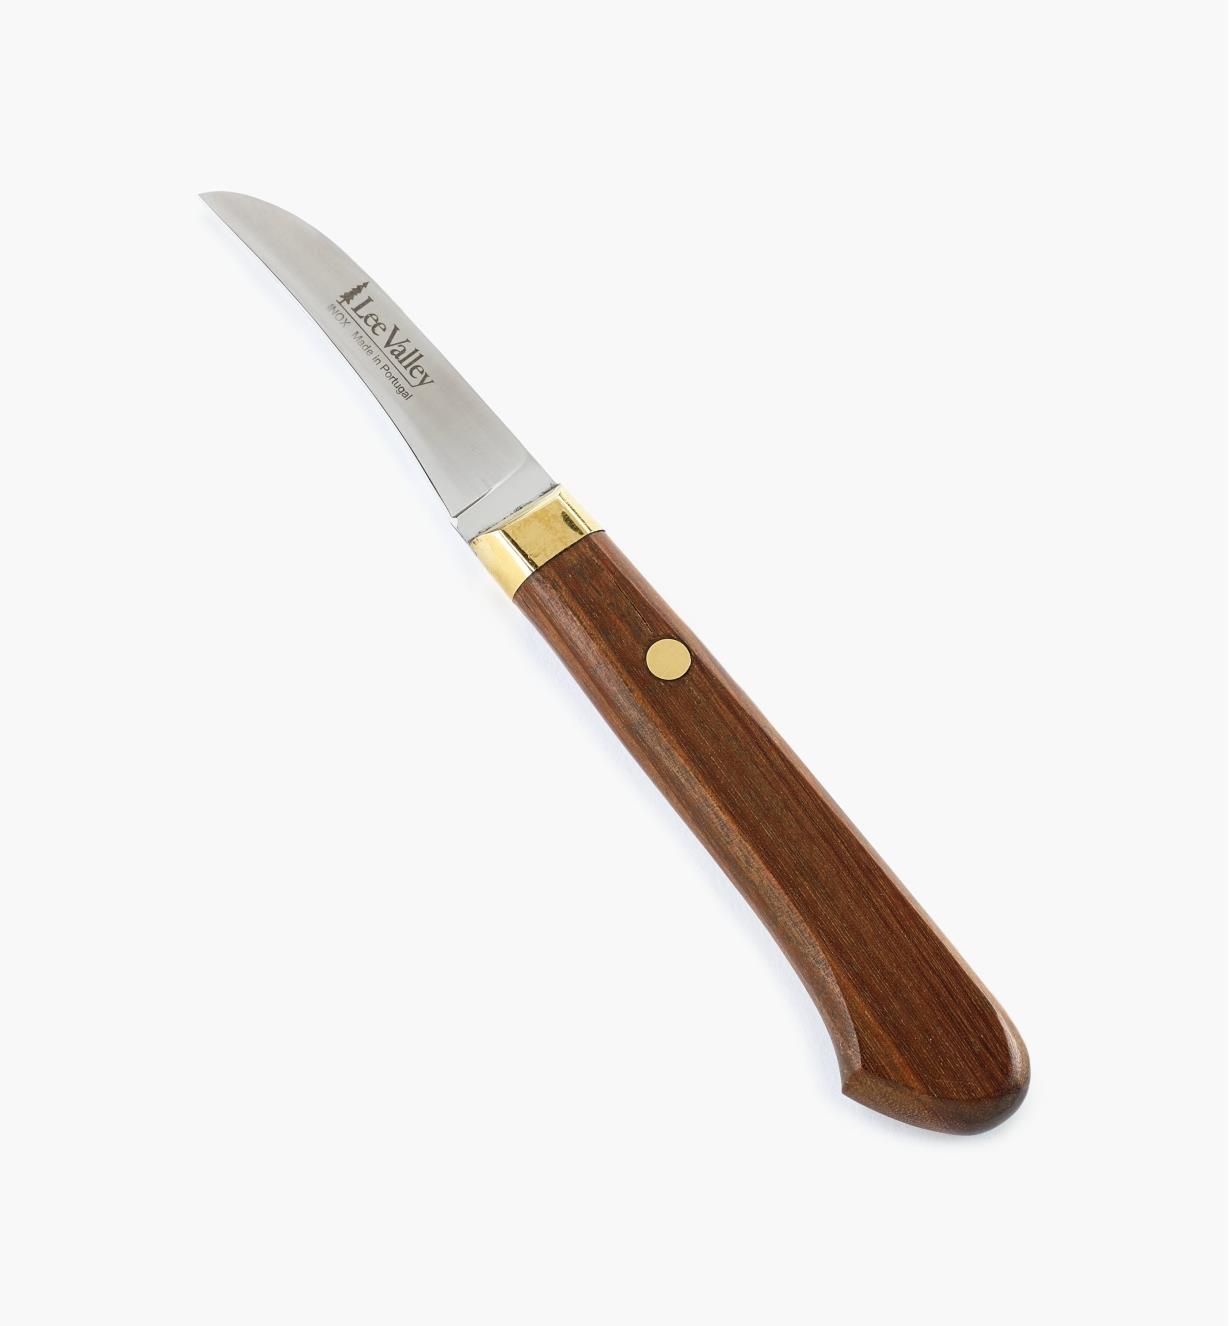 EM603 - Stainless-Steel Paring Knife